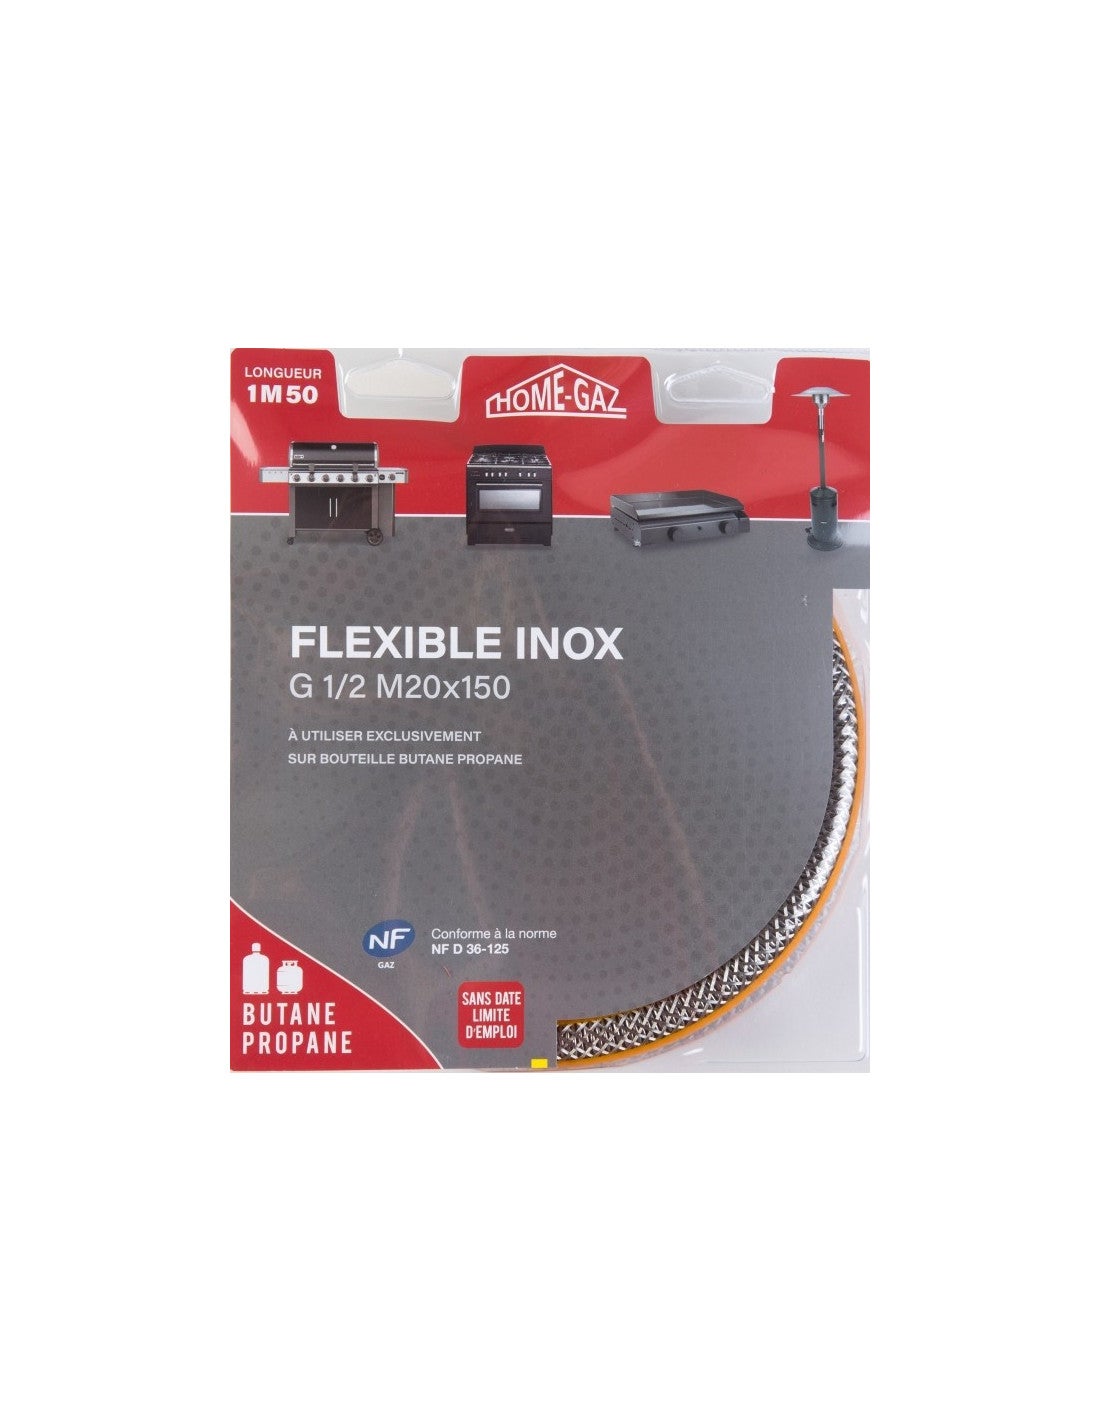 Flexible Inox sans date de peremption Butane/Propane-2,00ml